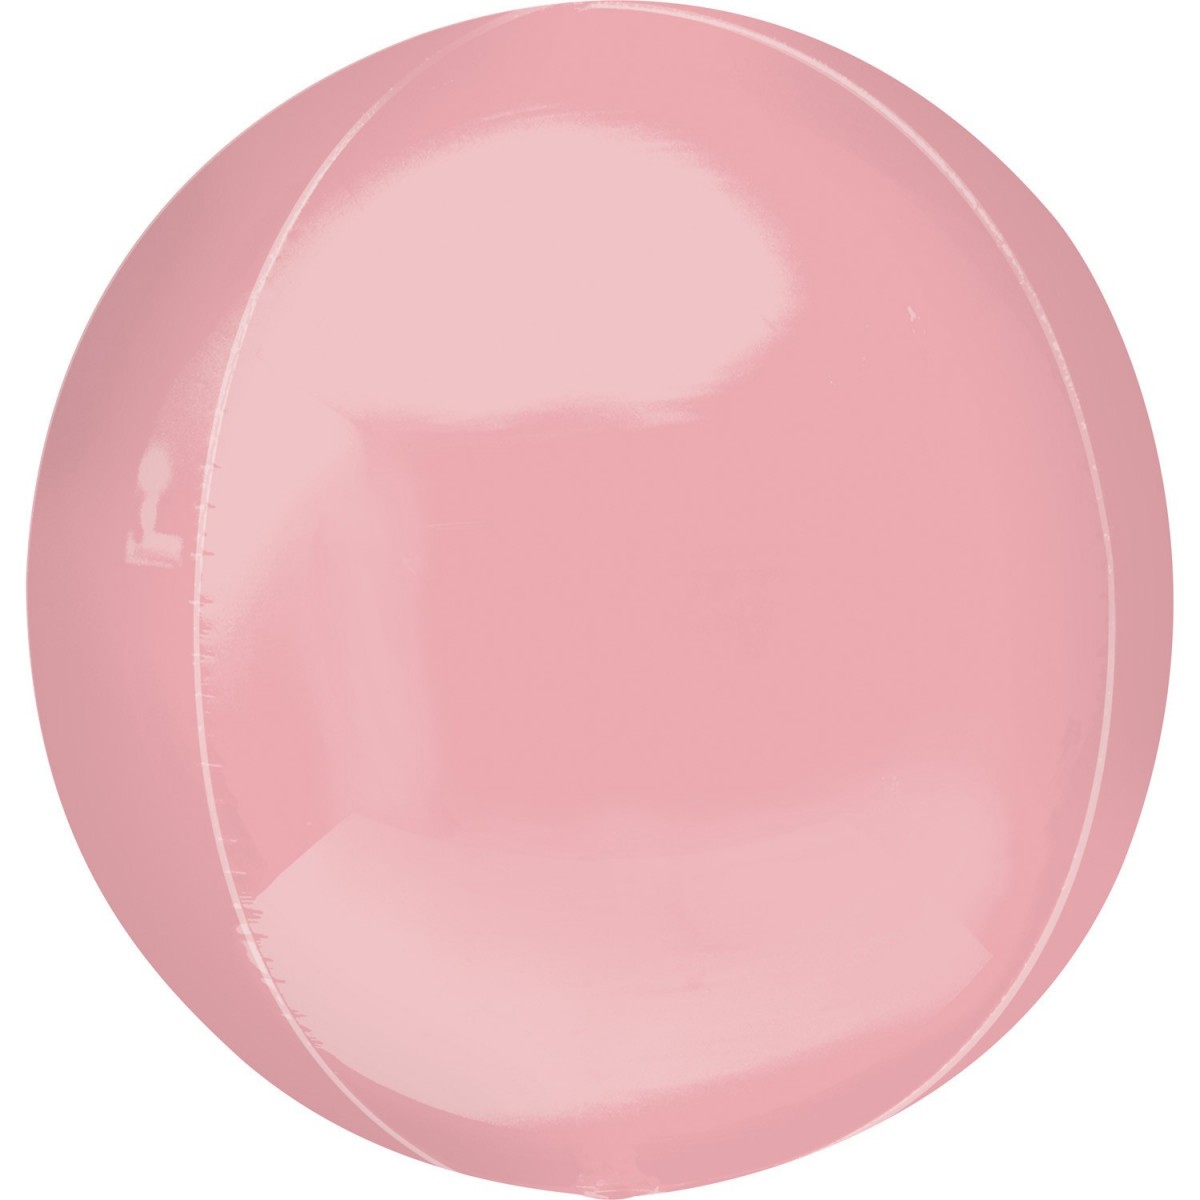 Ballon Orbz rose pastel 40 cm